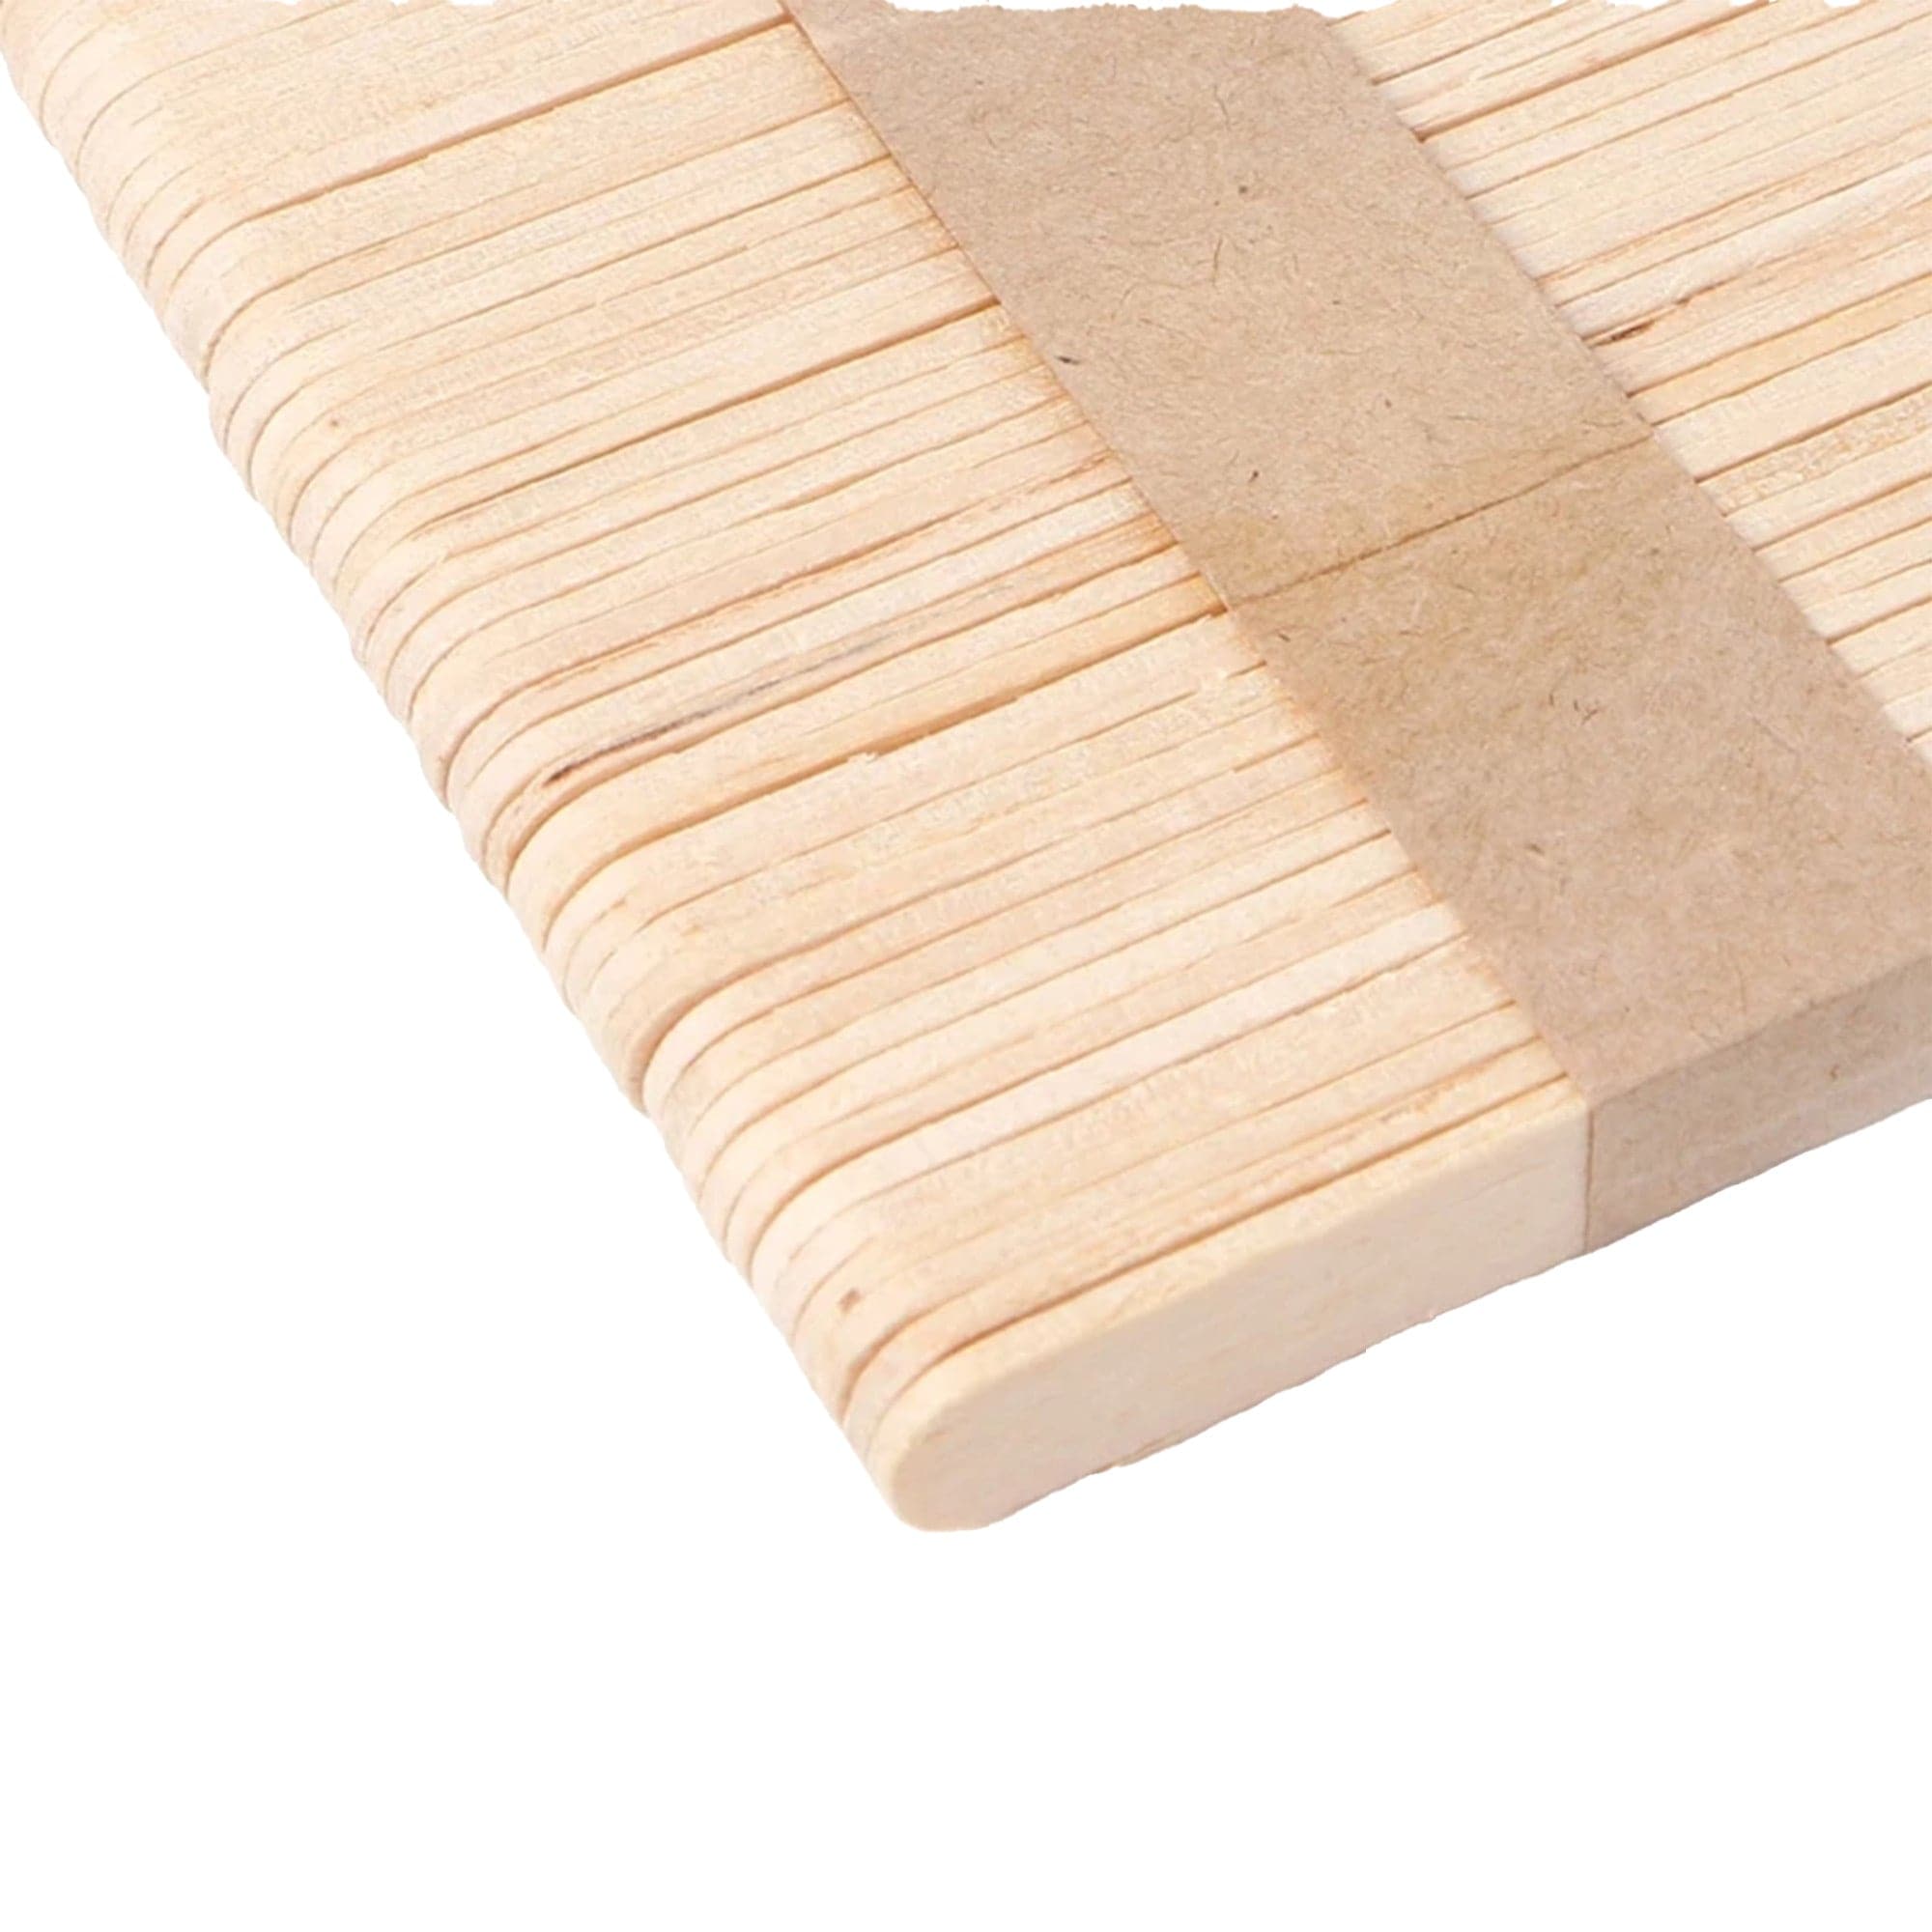 Eson - Waxing Spatula Disposable Wooden 10.5x1cm 50pcs